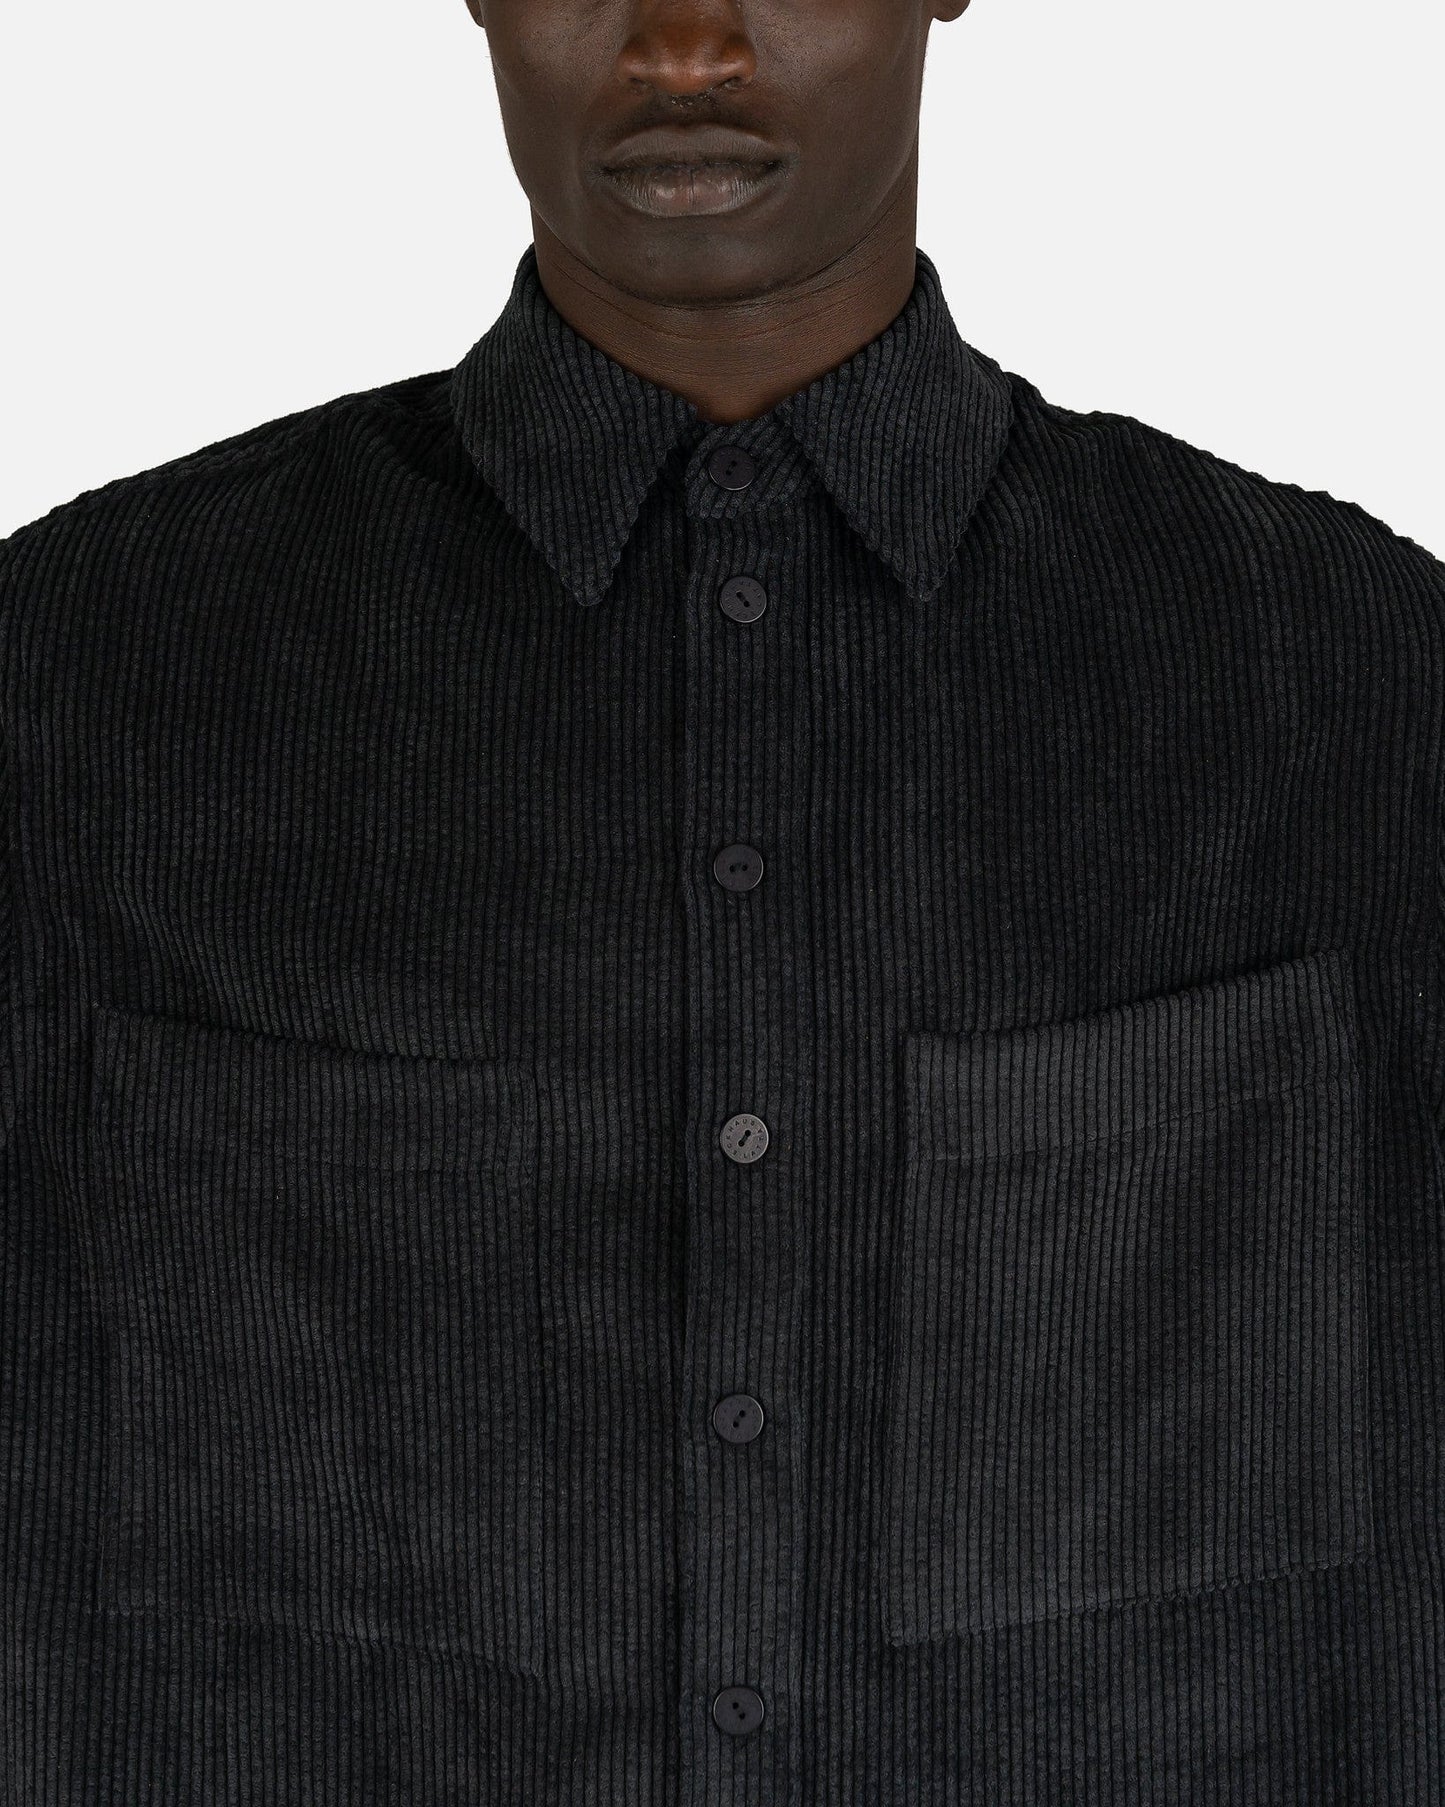 Eckhaus Latta Men's Shirts Pebble Button Down in Faded Black